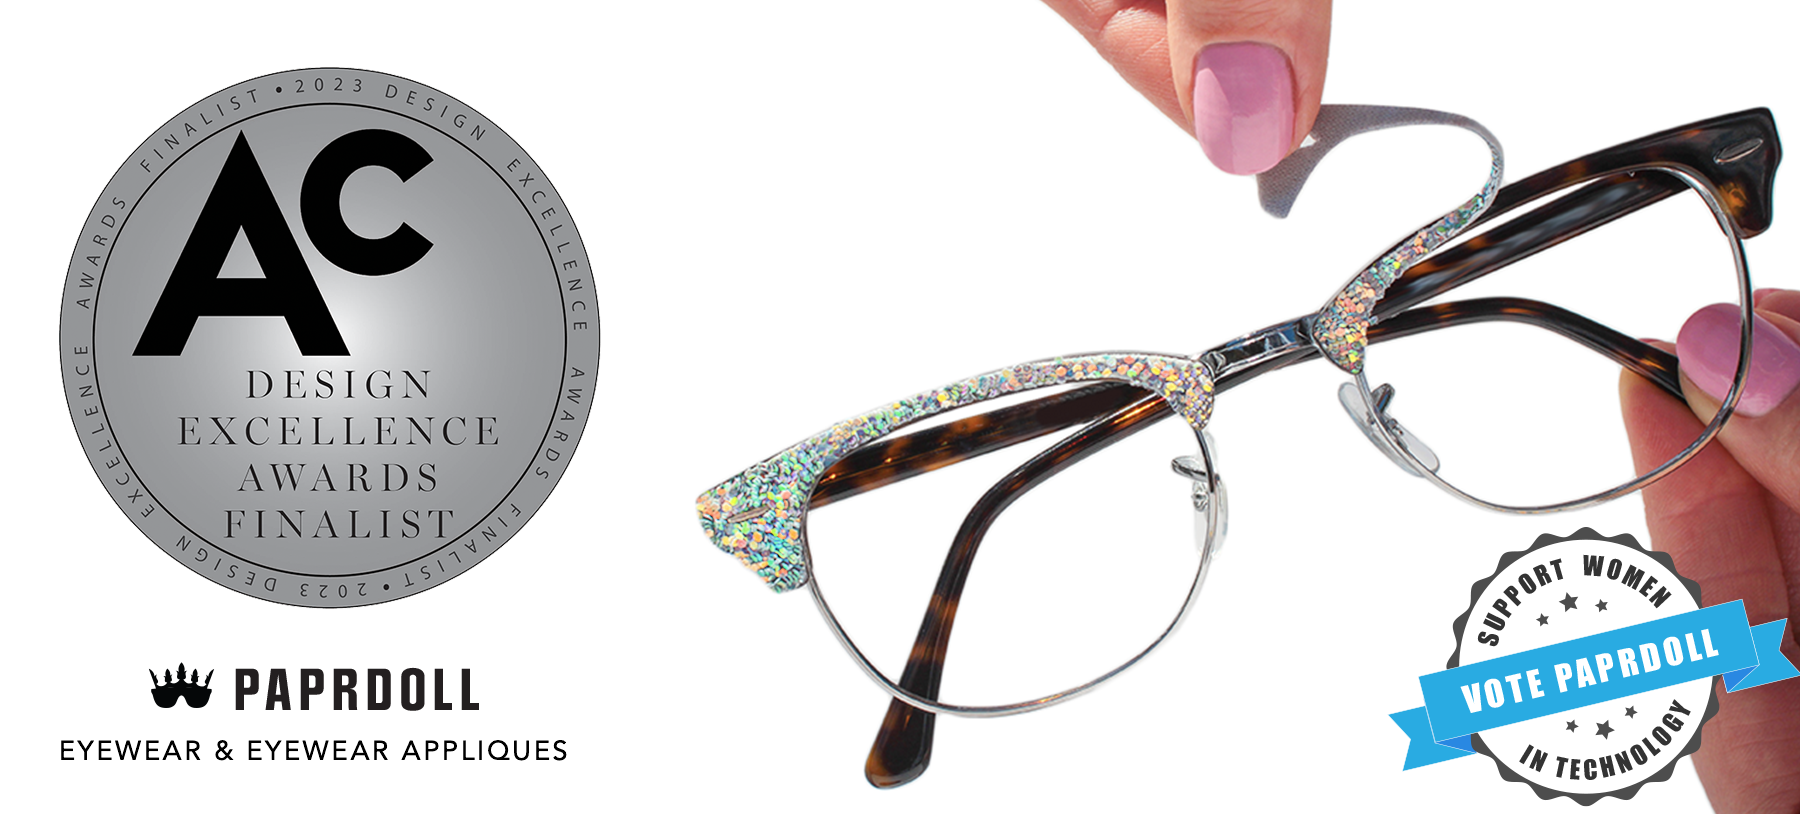 PaprDoll Eyewear Accessories Council Design Excellence Awards Finalist